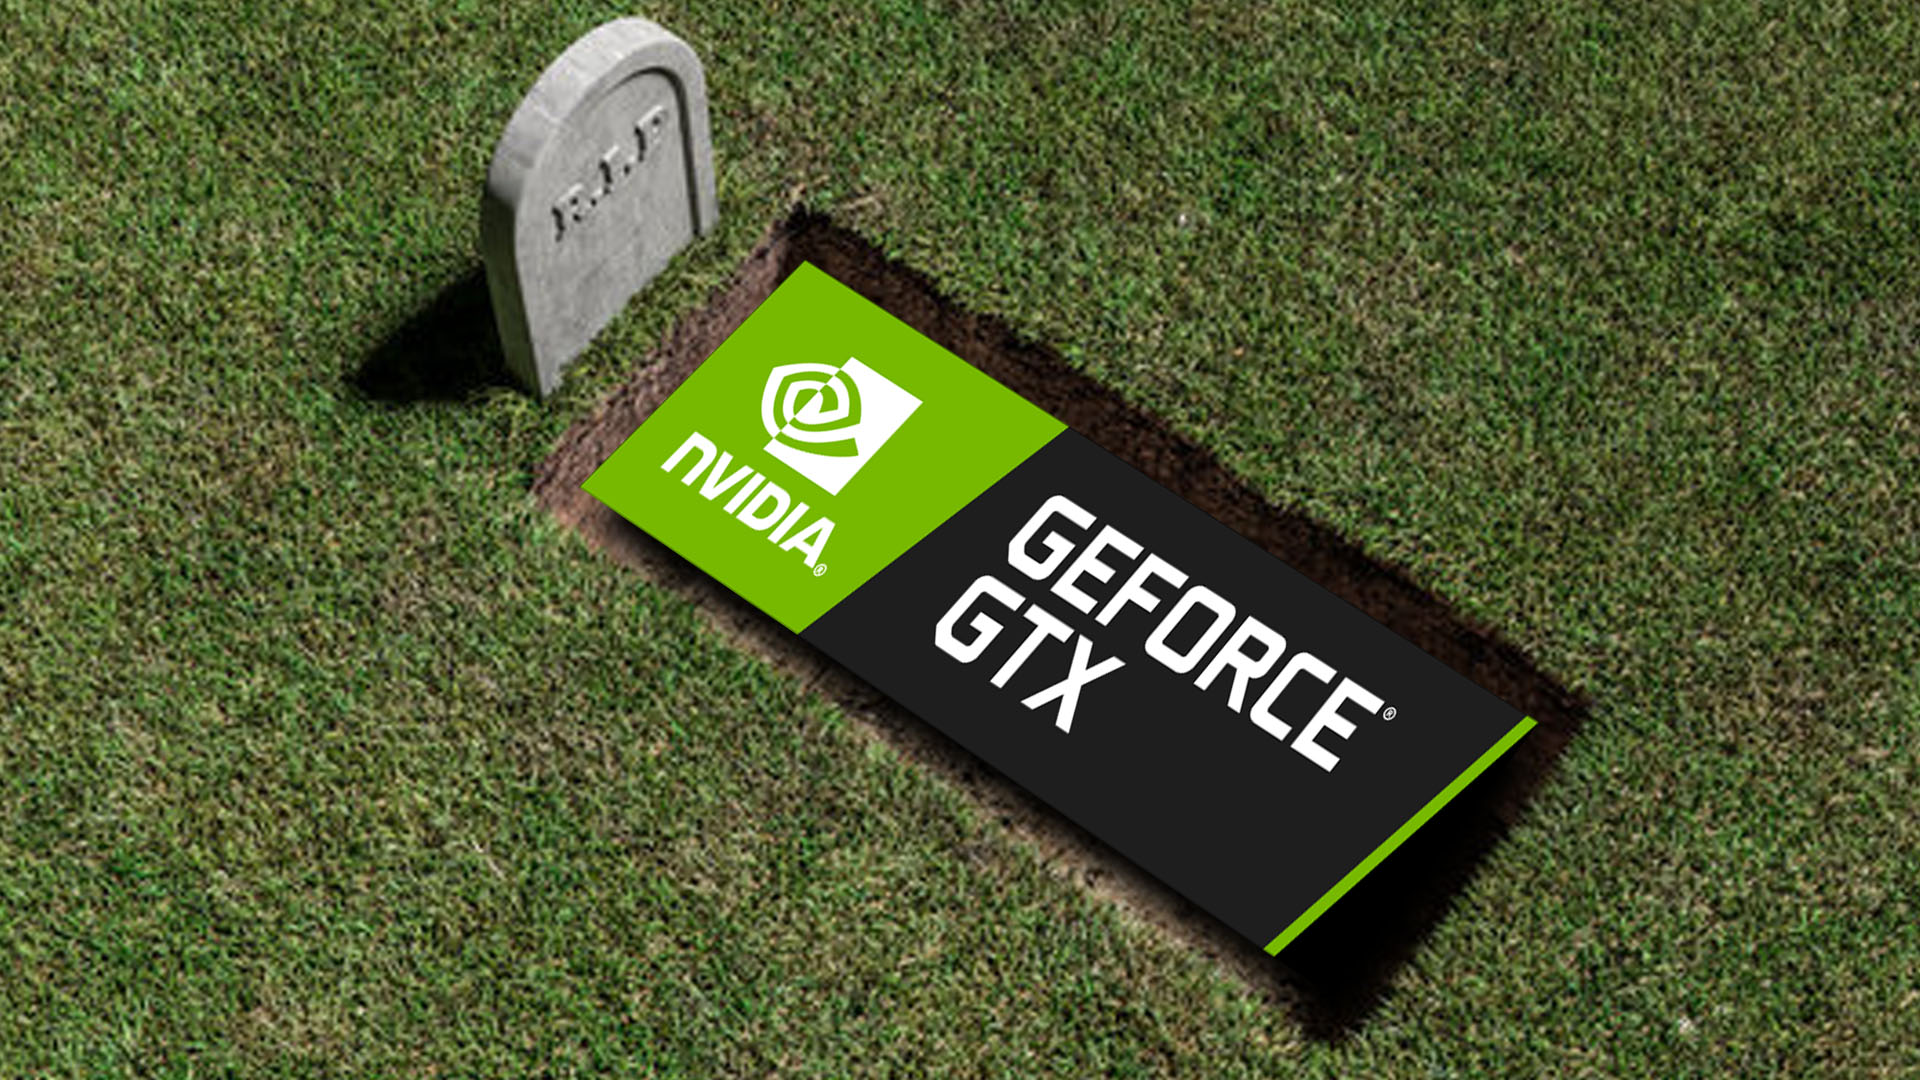 The Nvidia GeForce GTX era is finally over